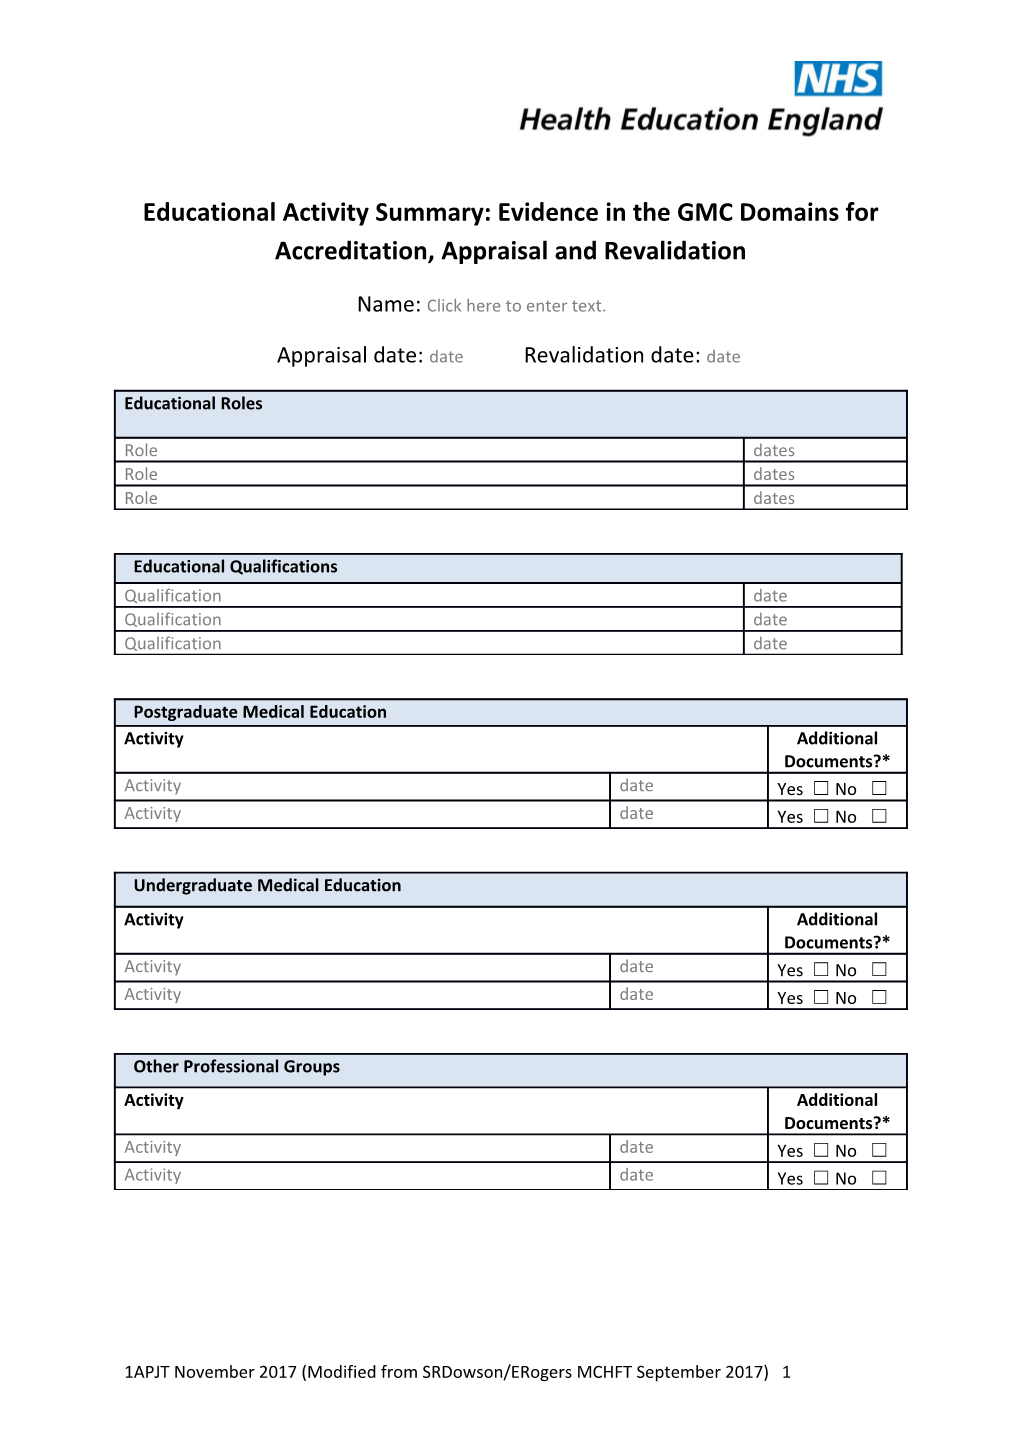 Educational Activity Summary:Evidence in the GMC Domains for Accreditation, Appraisal